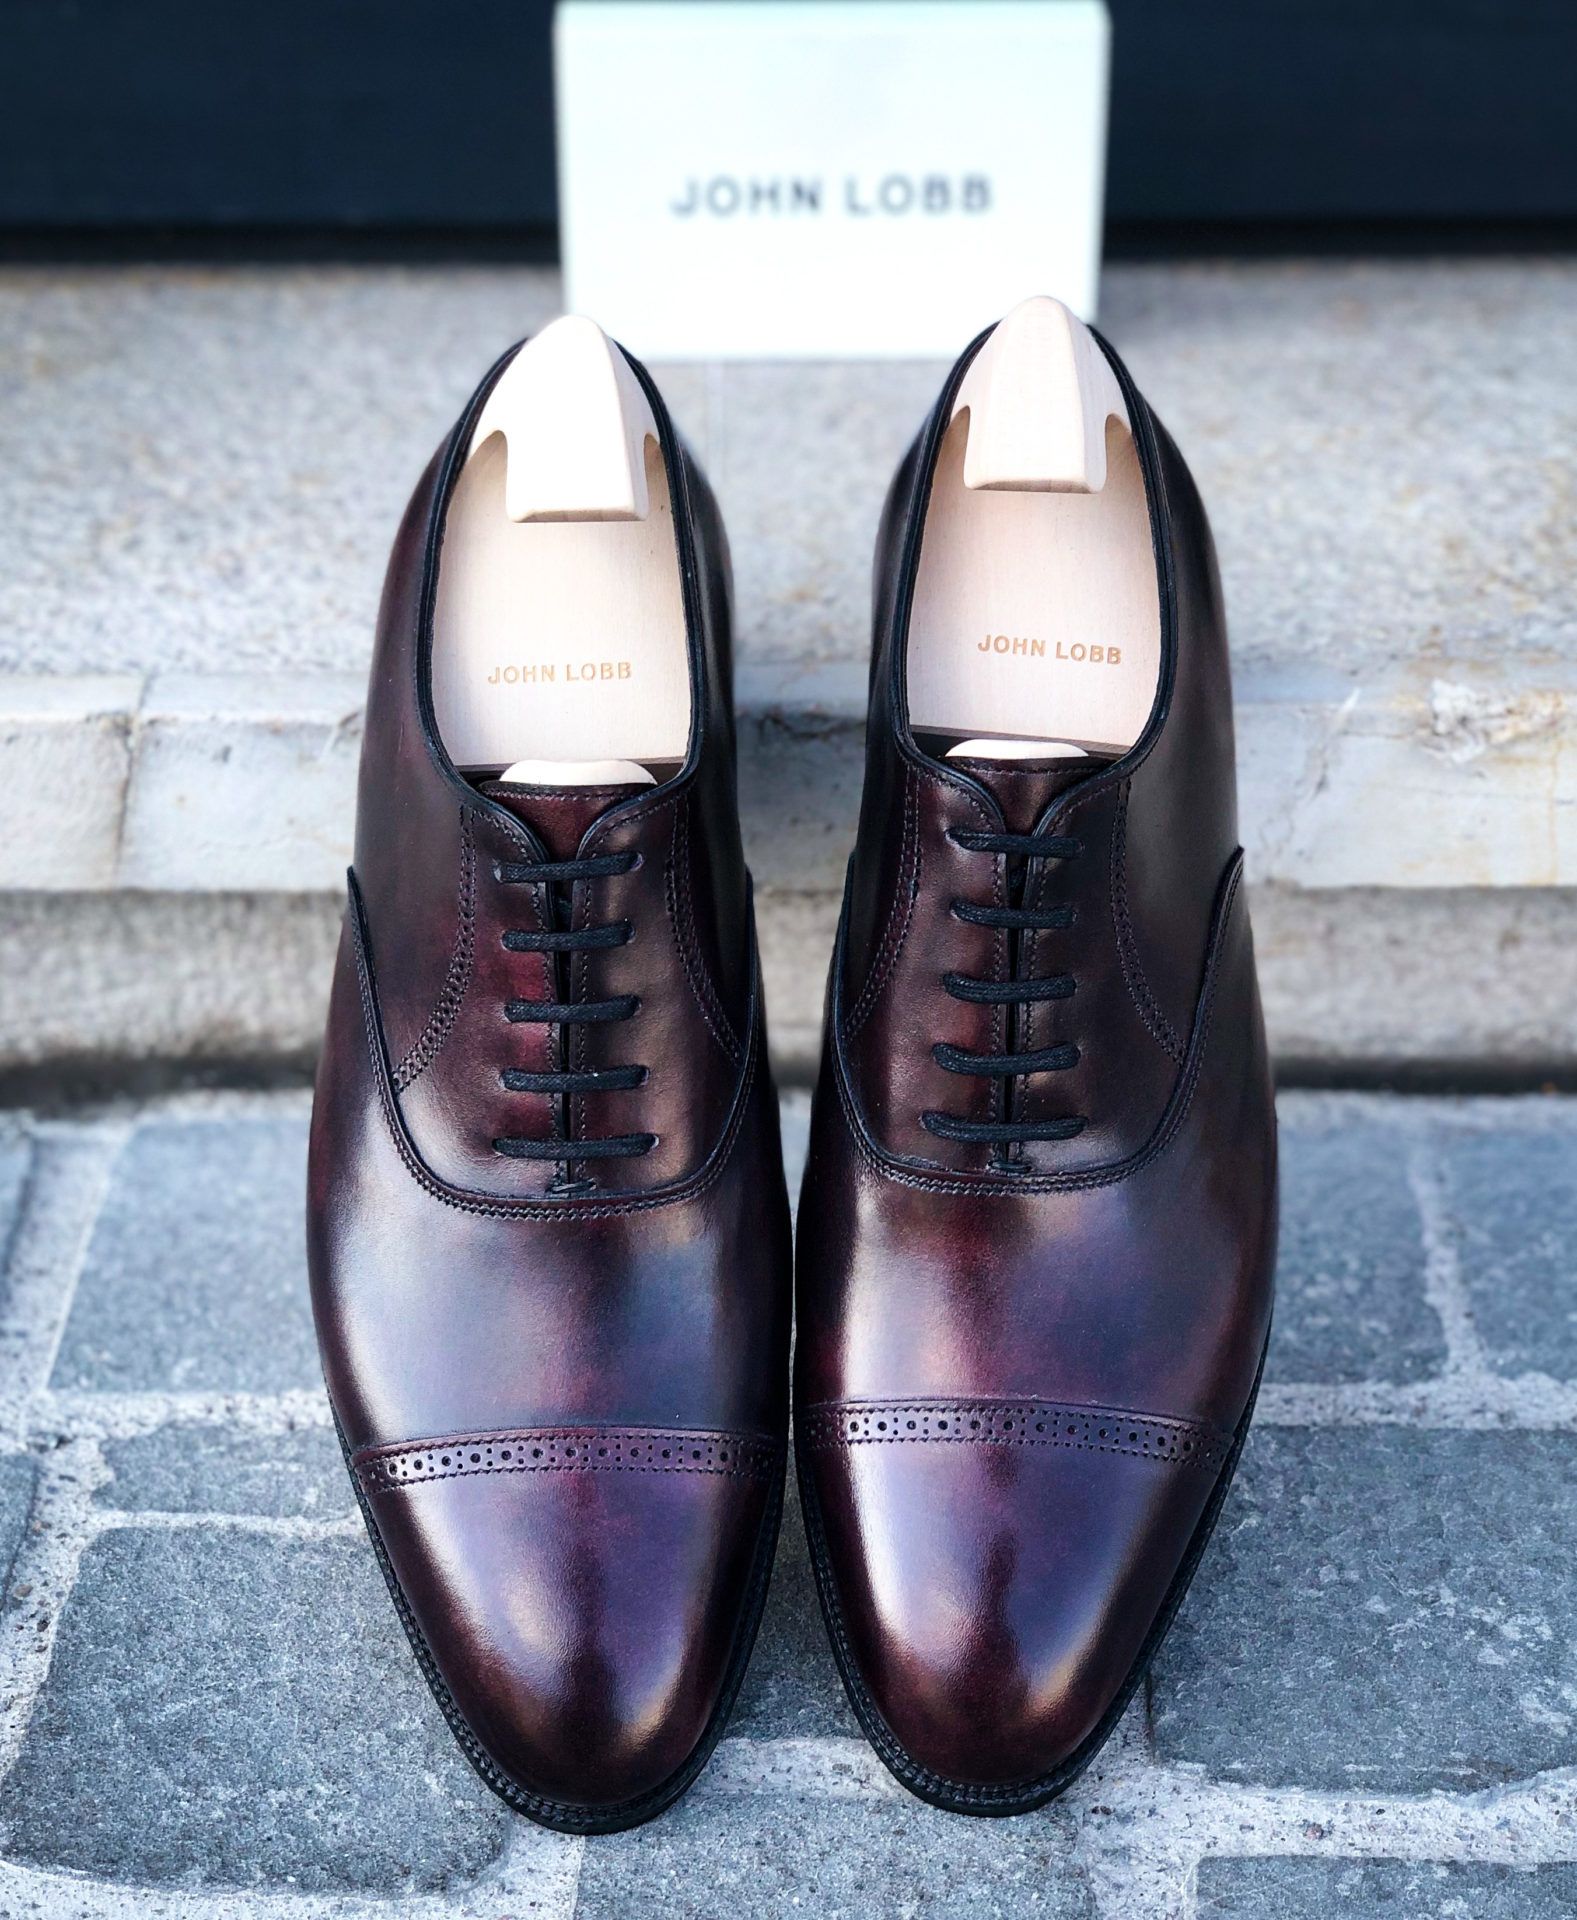 JOHN LOBB PHILIP II • Luxury Shoes in Geneva | Brogue